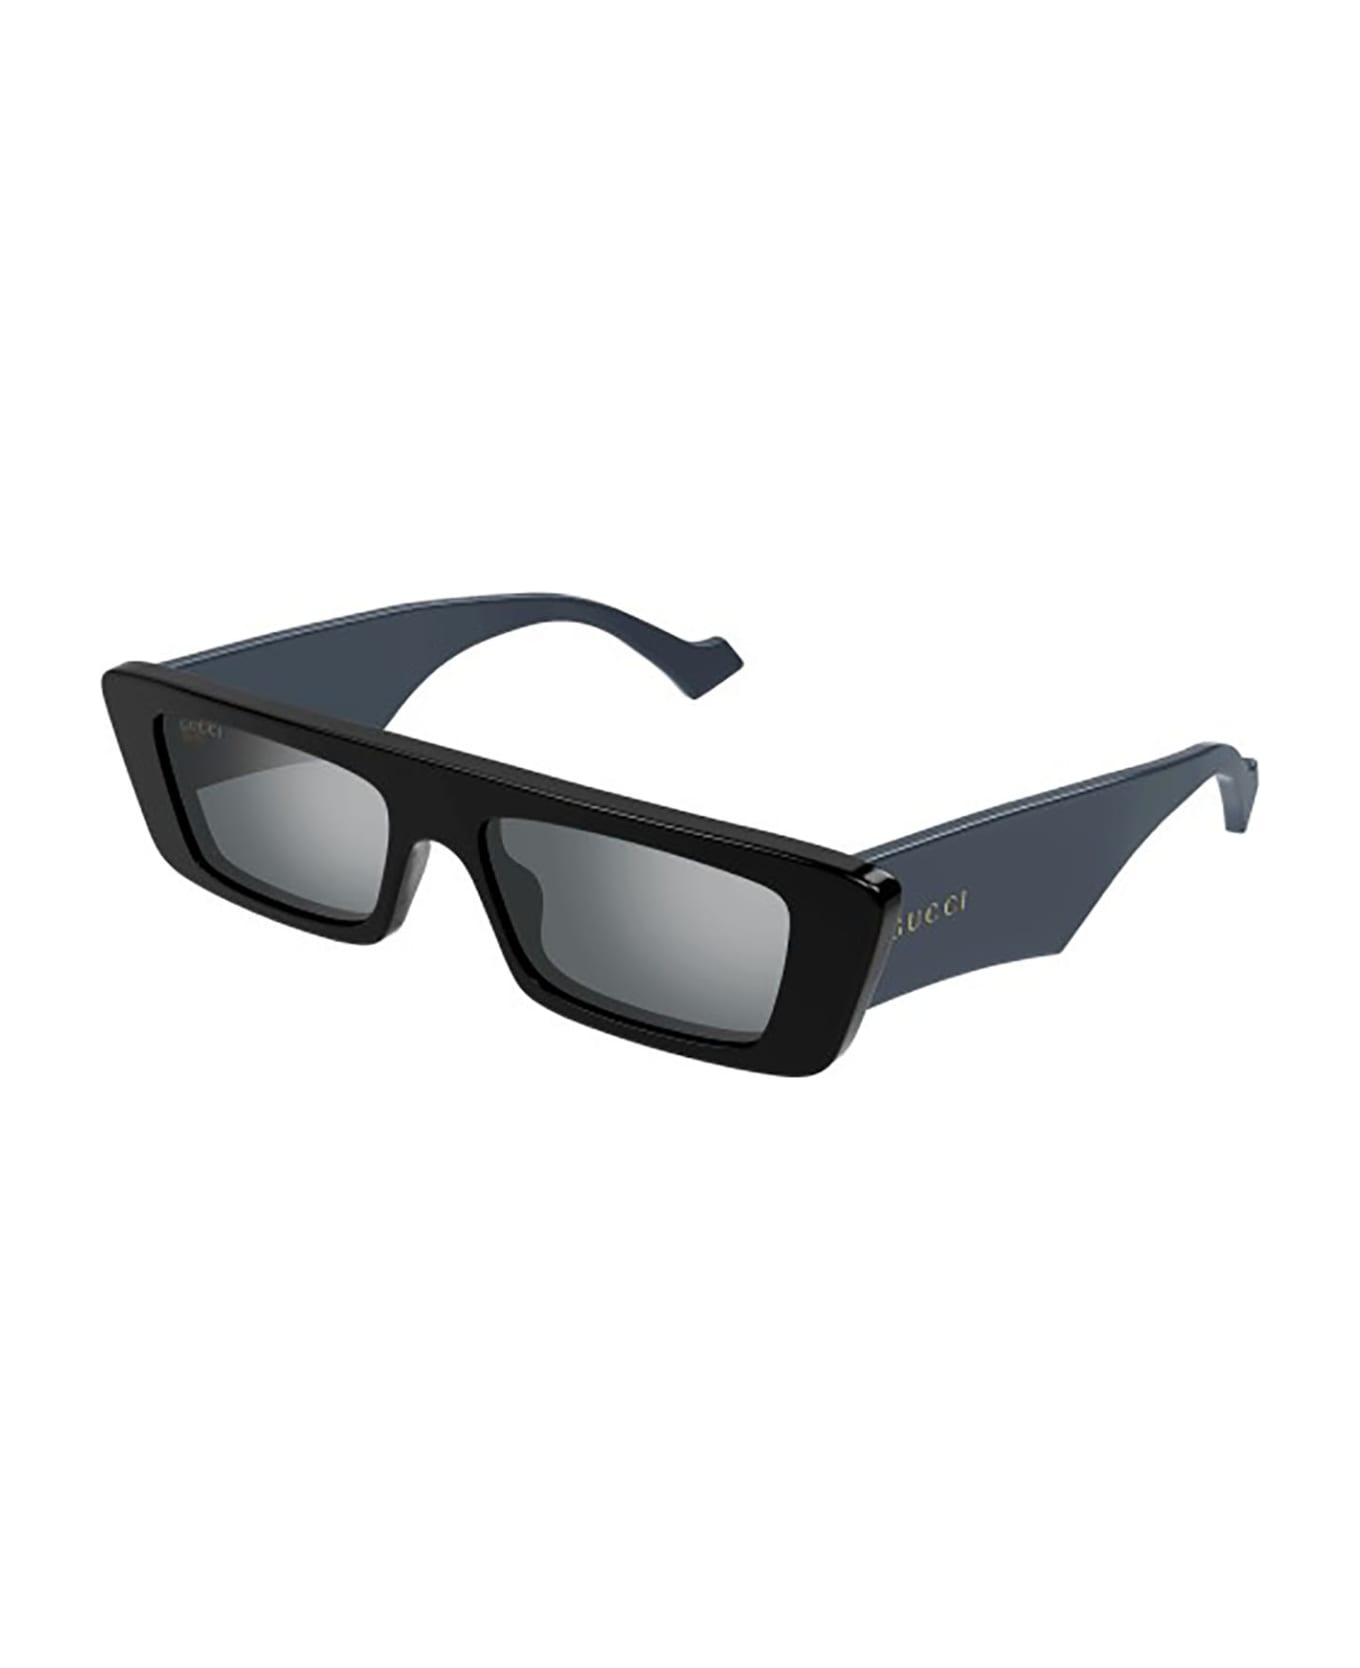 Gucci Eyewear Gg1331s Sunglasses - BLACK-GREY-SILVER サングラス